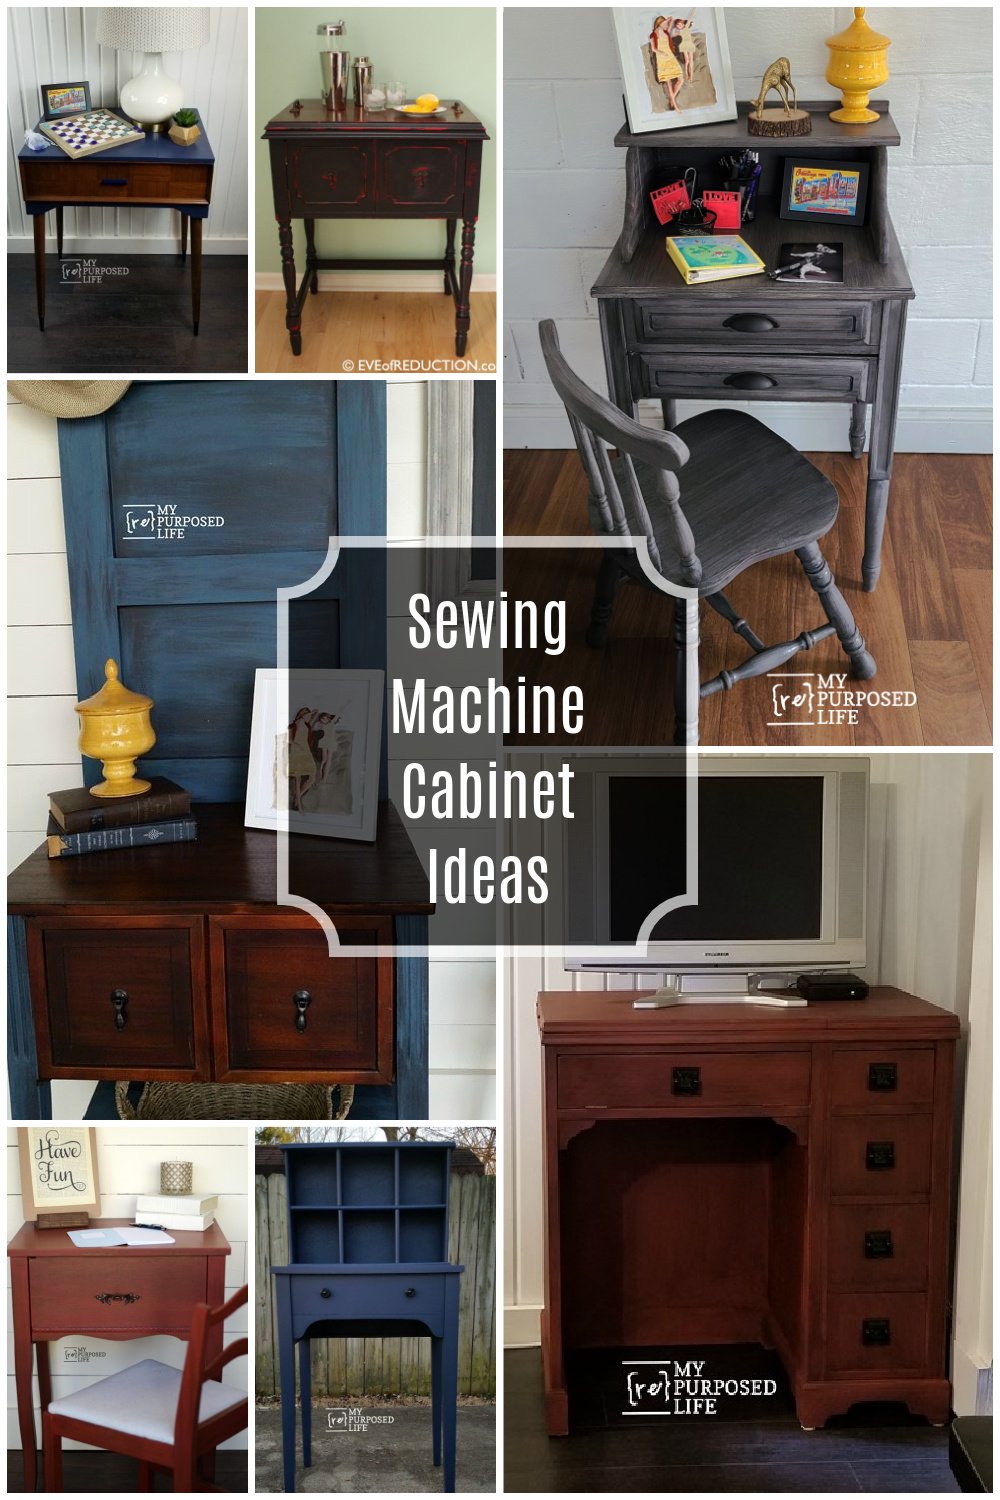 Repurpose Sewing Machine Cabinet Ideas - My Repurposed Life®